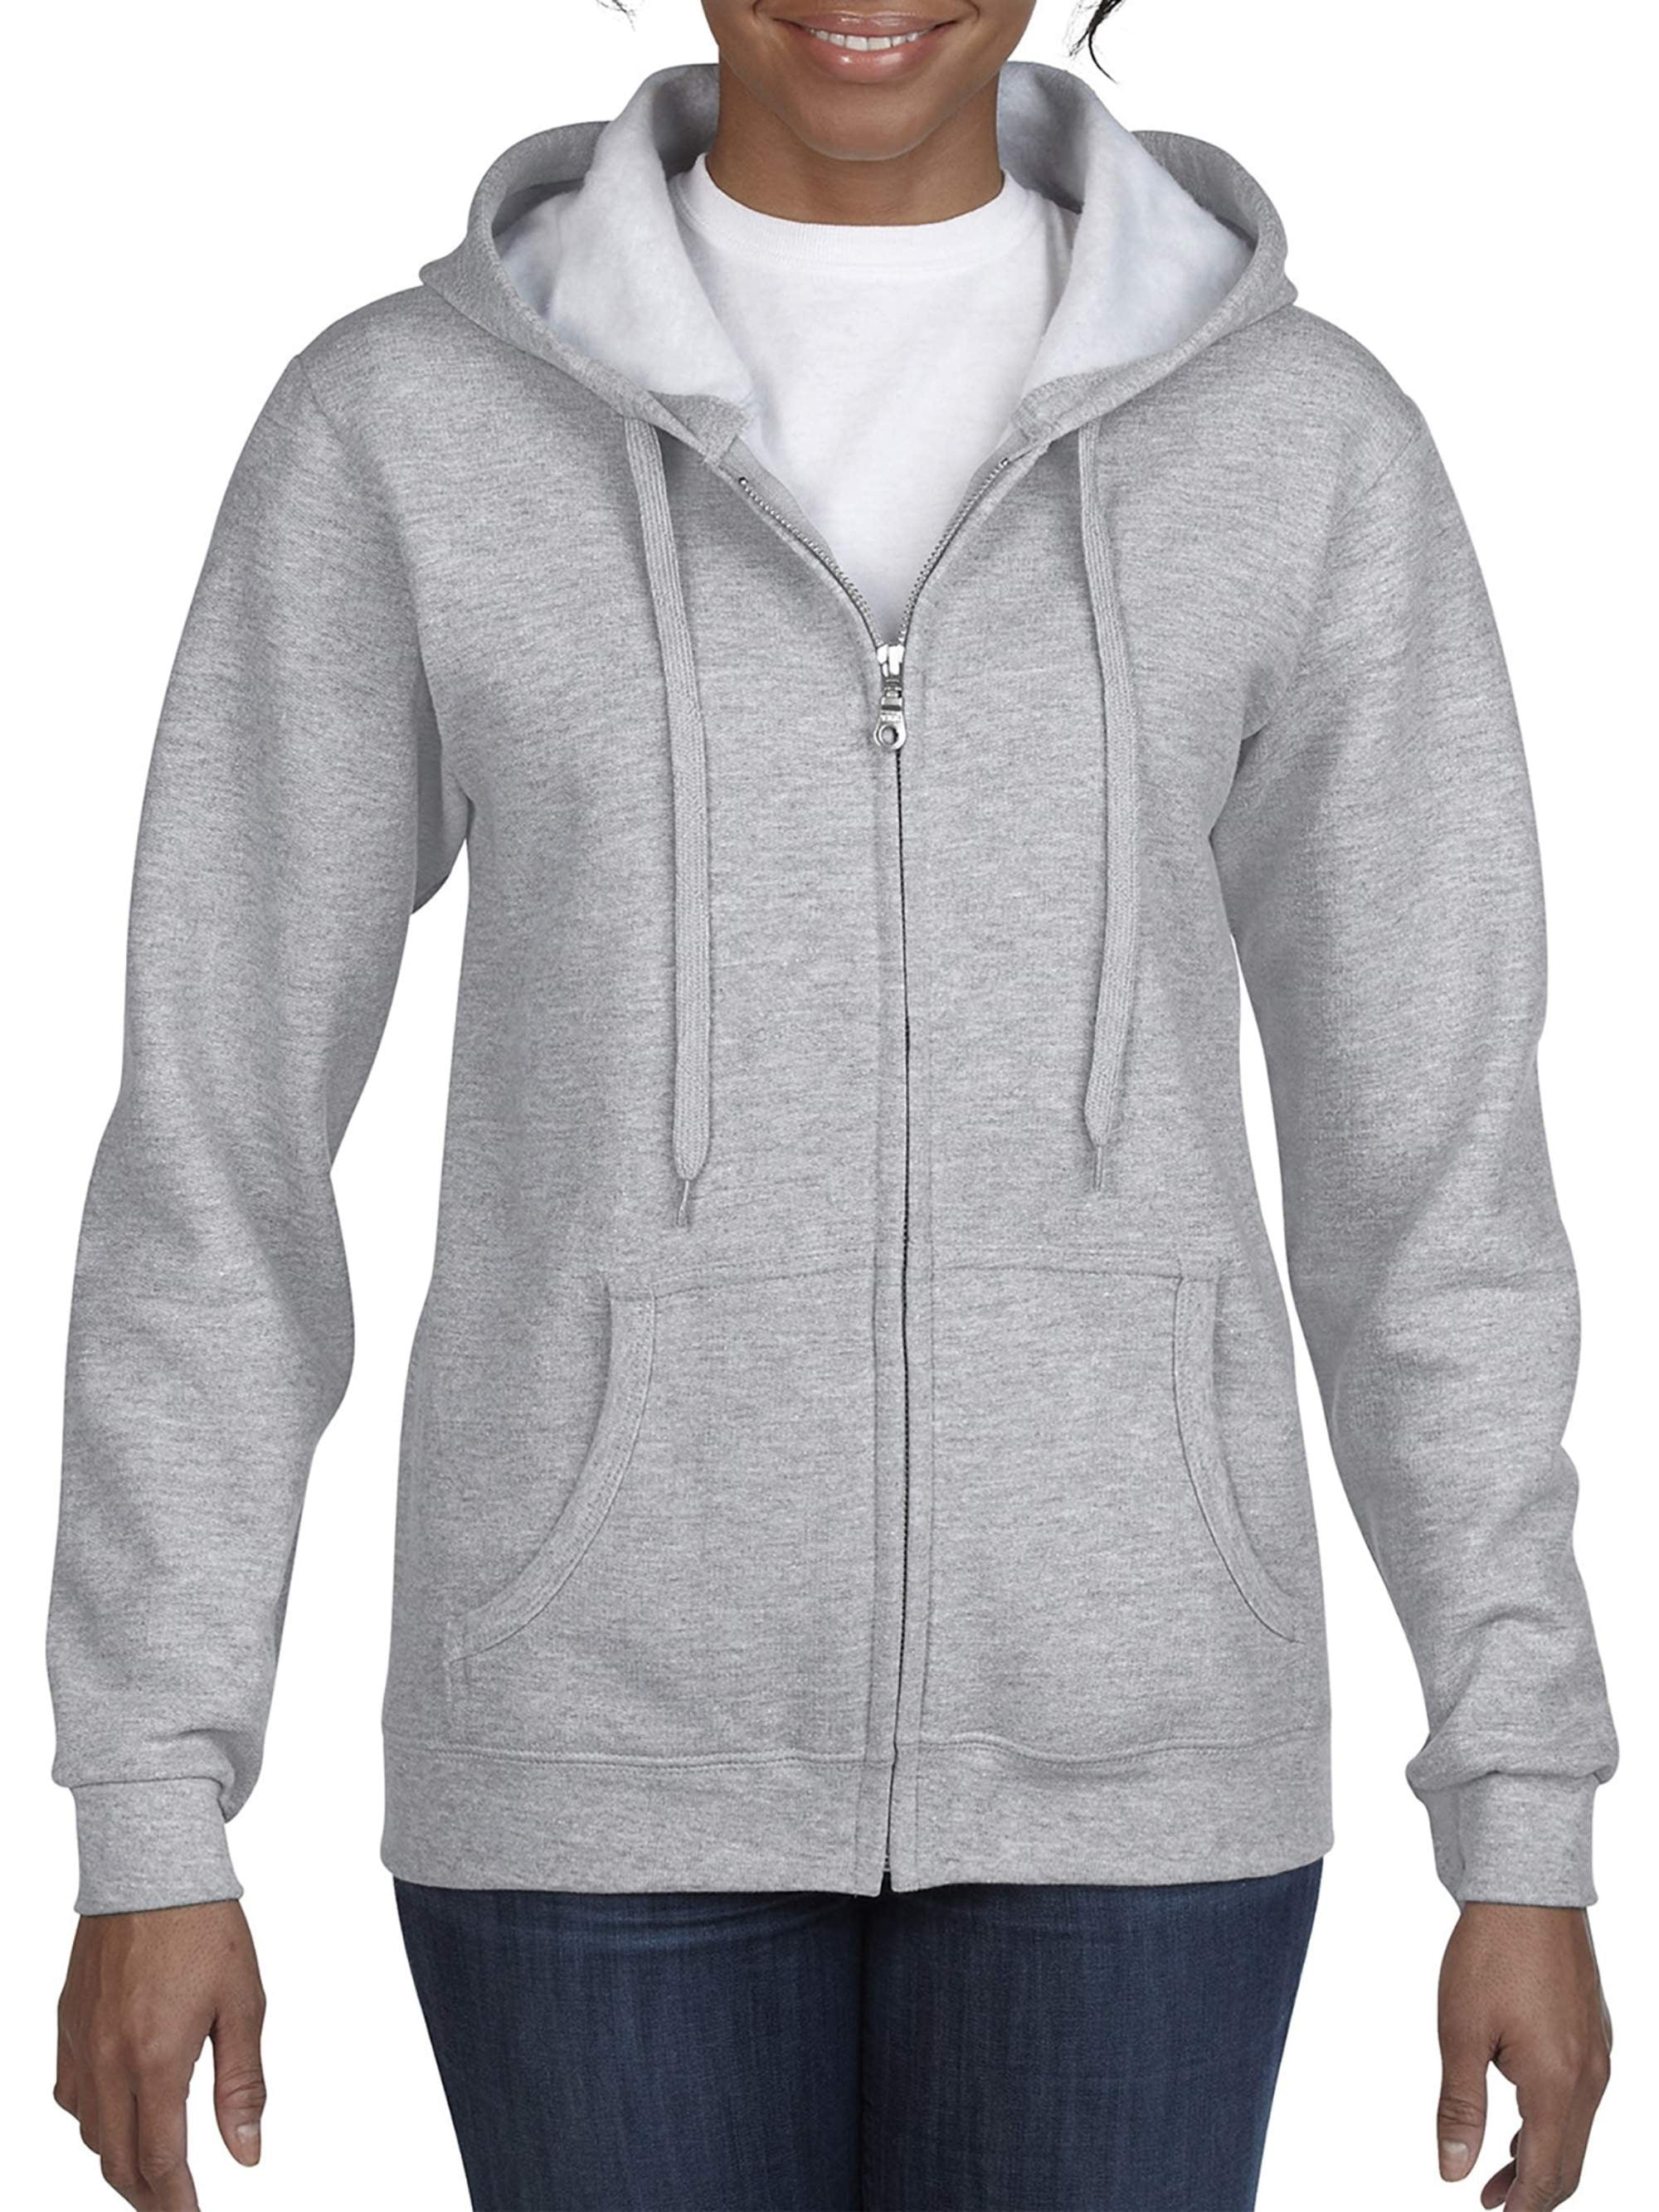 Gildan Women's Athleisure Heavy Blend Full Zip Hooded Sweatshirt ...